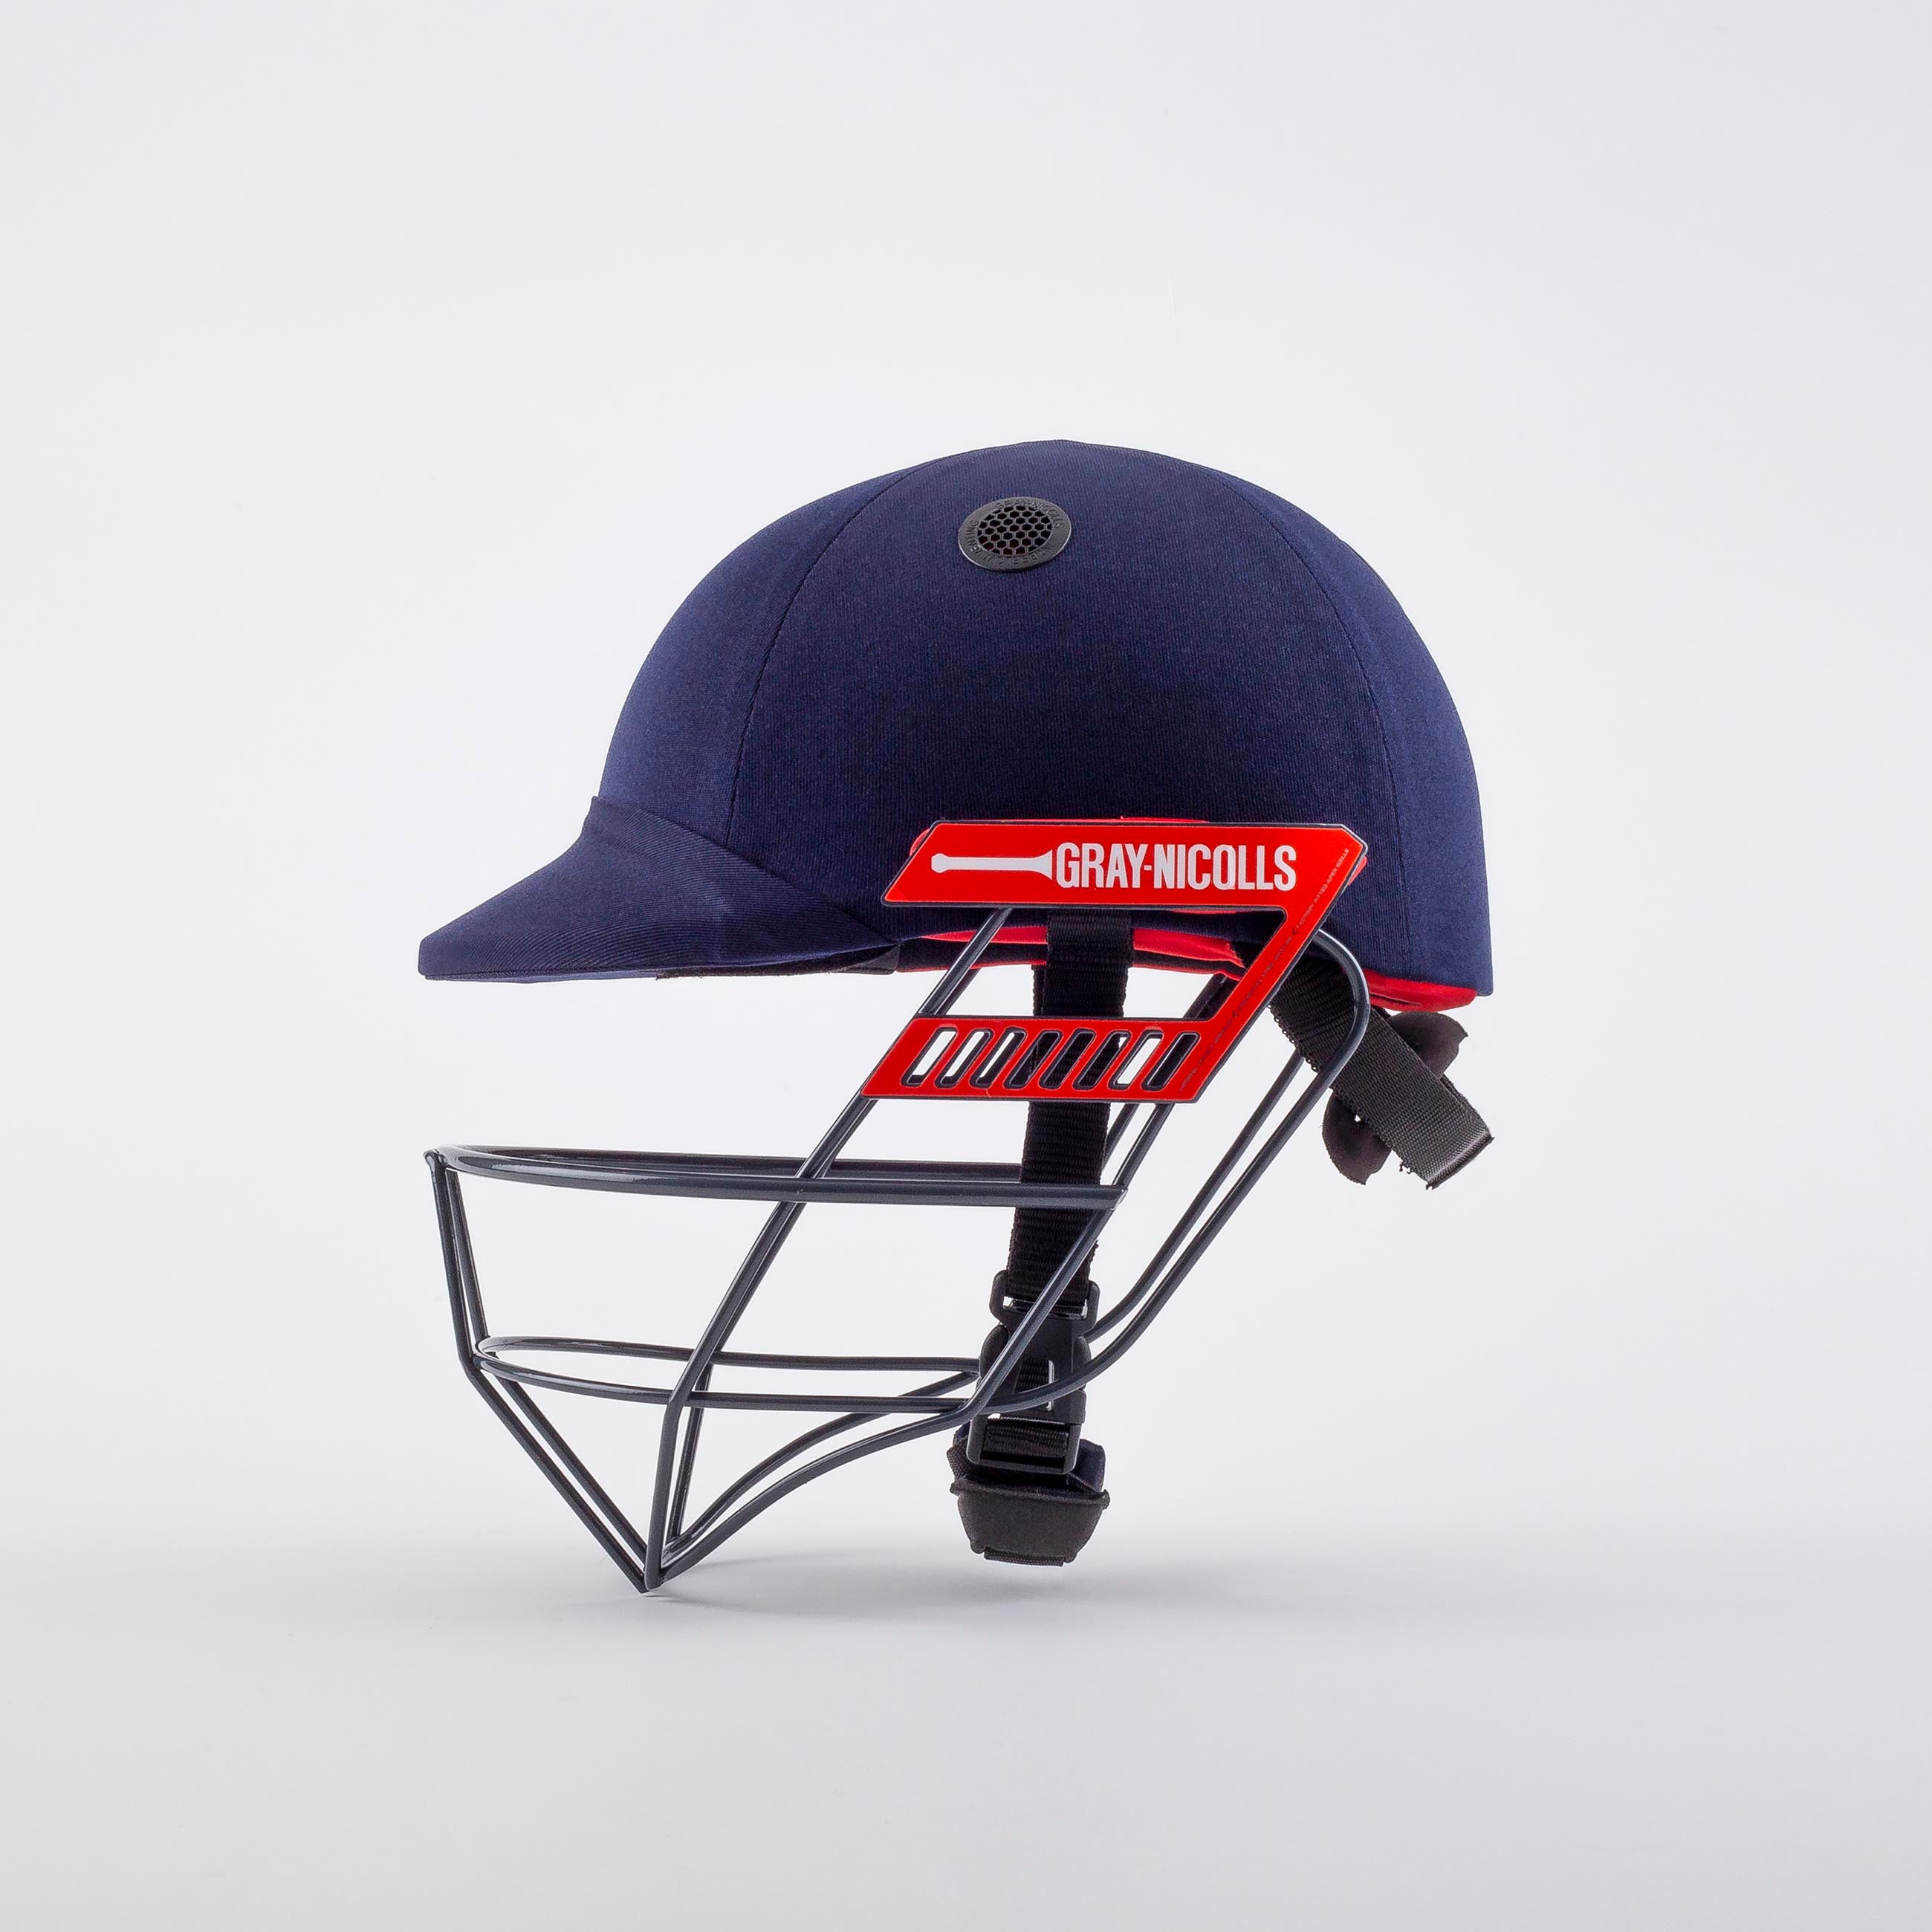 Ultimate Cricket Helmet Senior